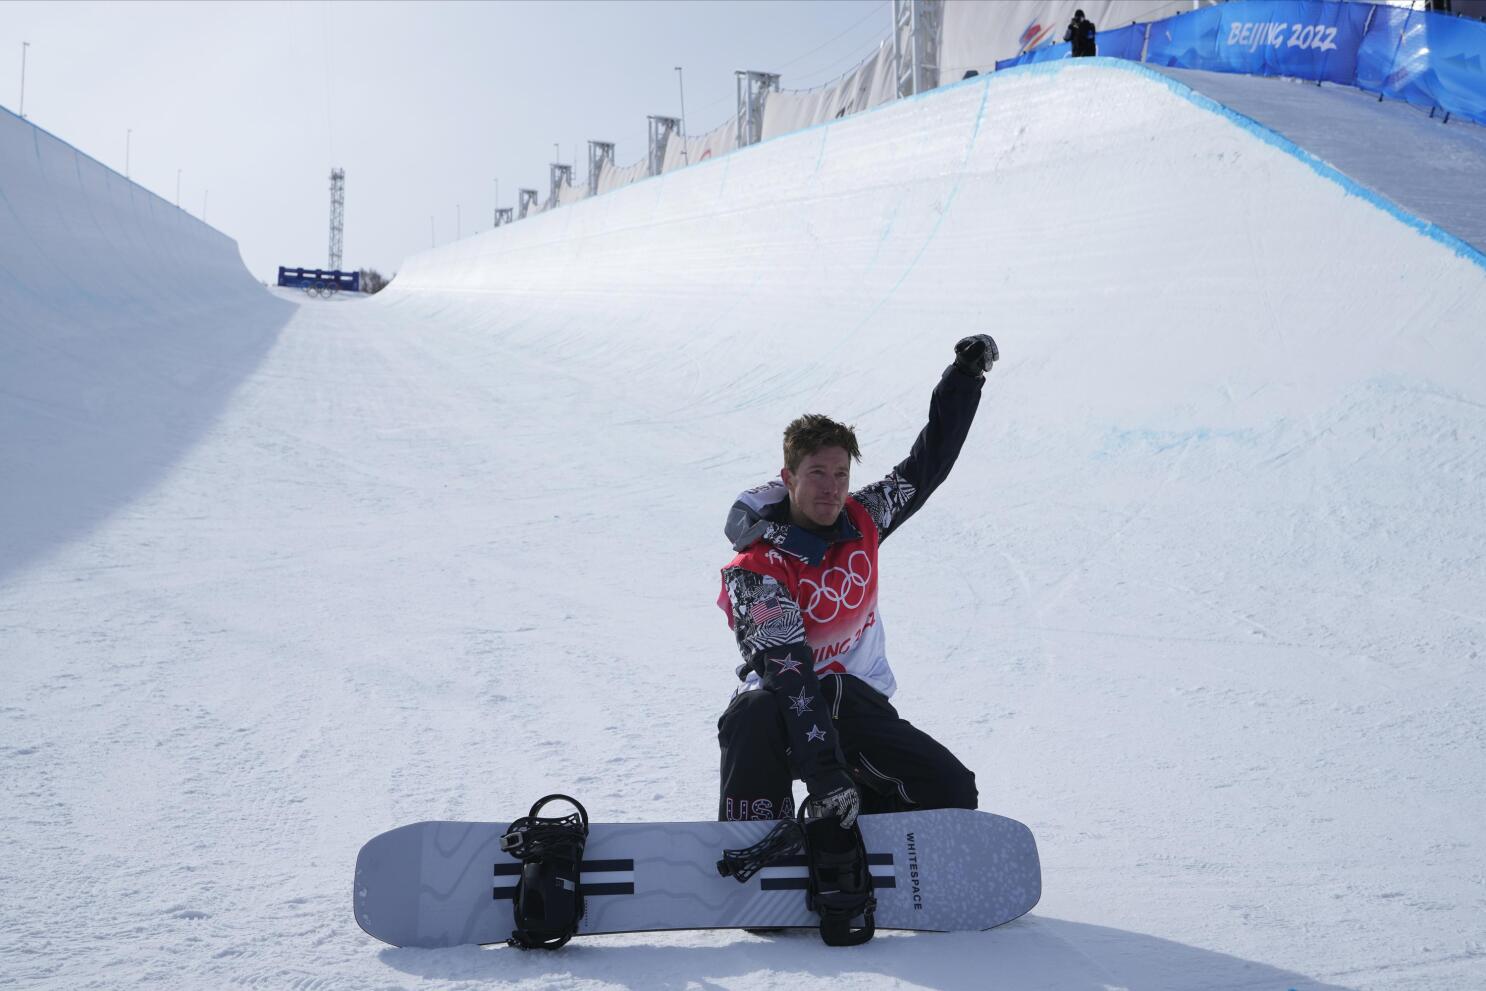 Snowboarder Ayumu Hirano takes silver in men's halfpipe behind